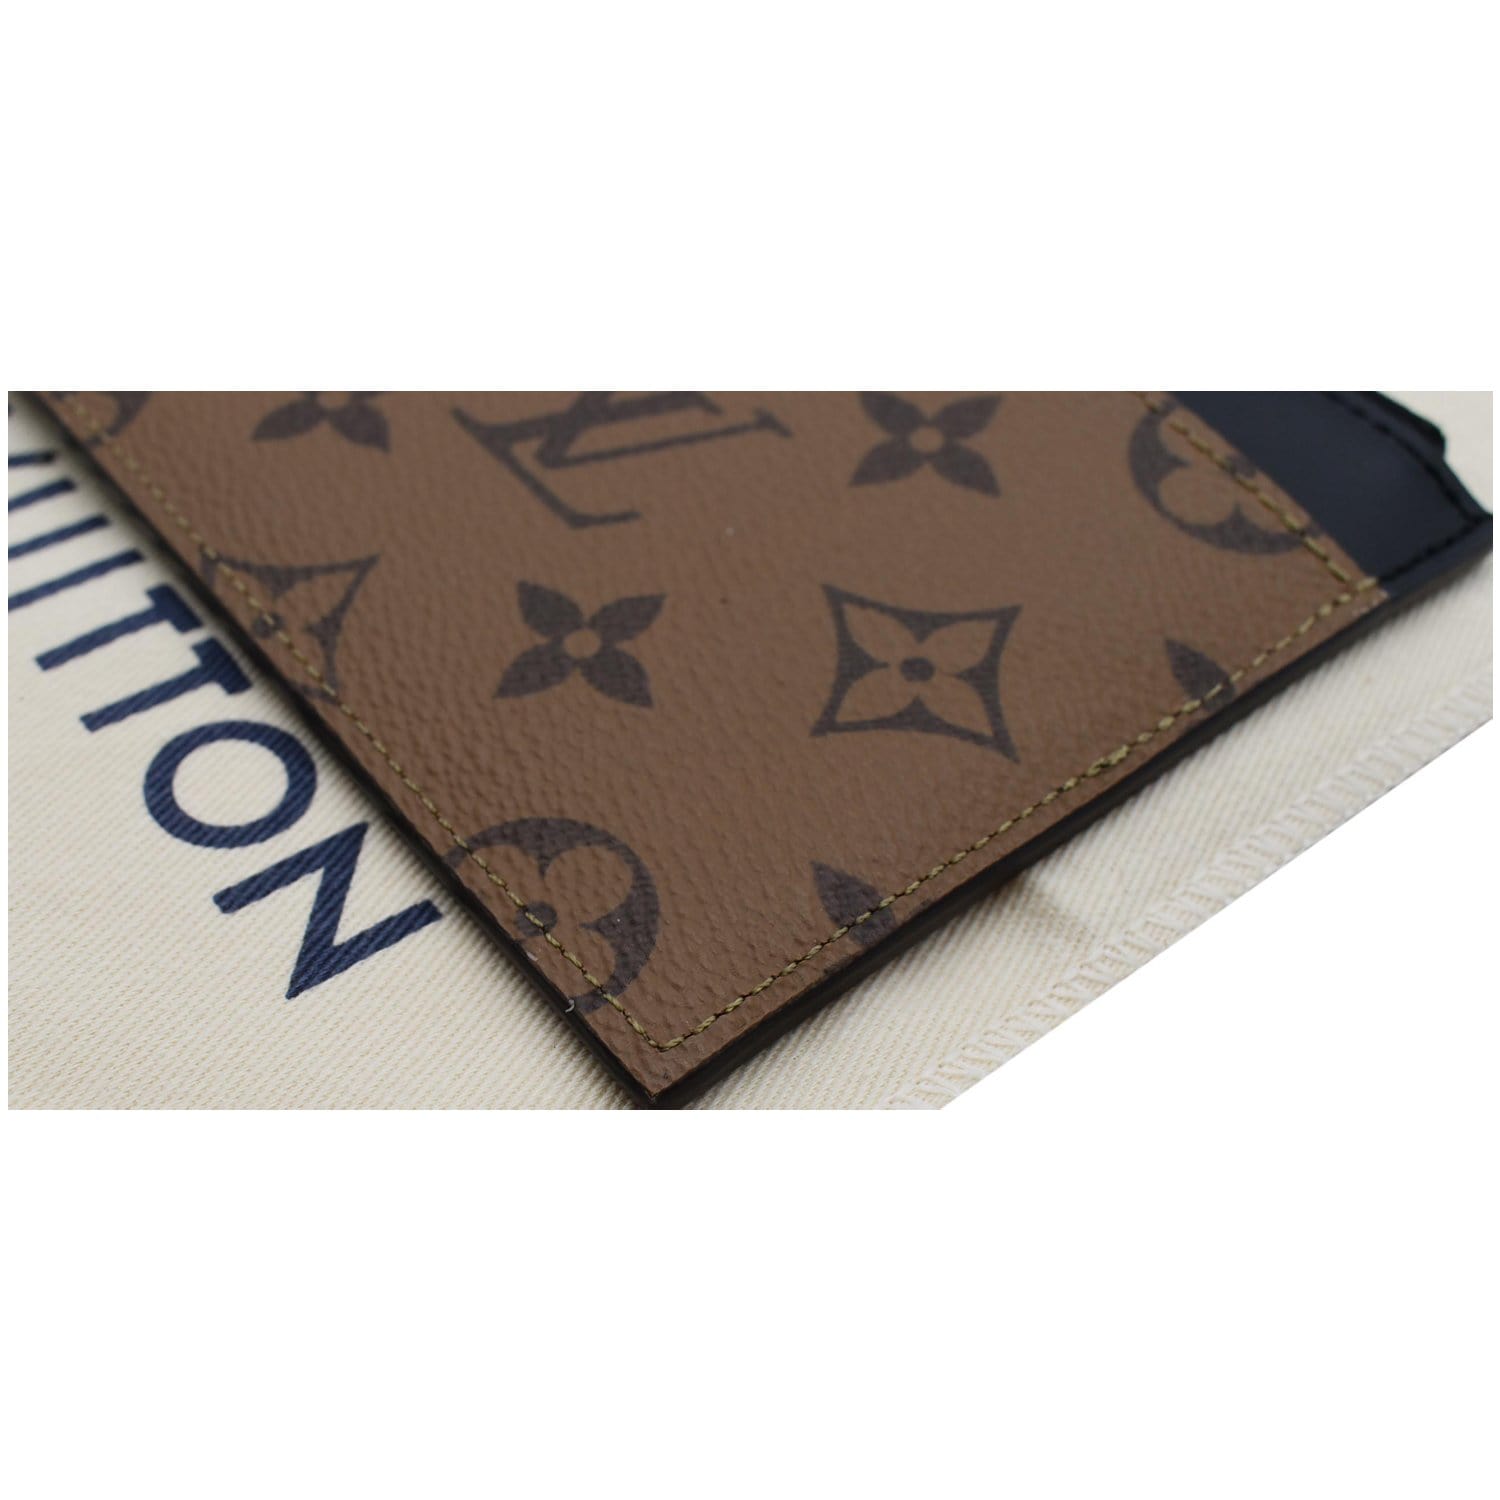 Louis Vuitton MONOGRAM Slim purse in 2023